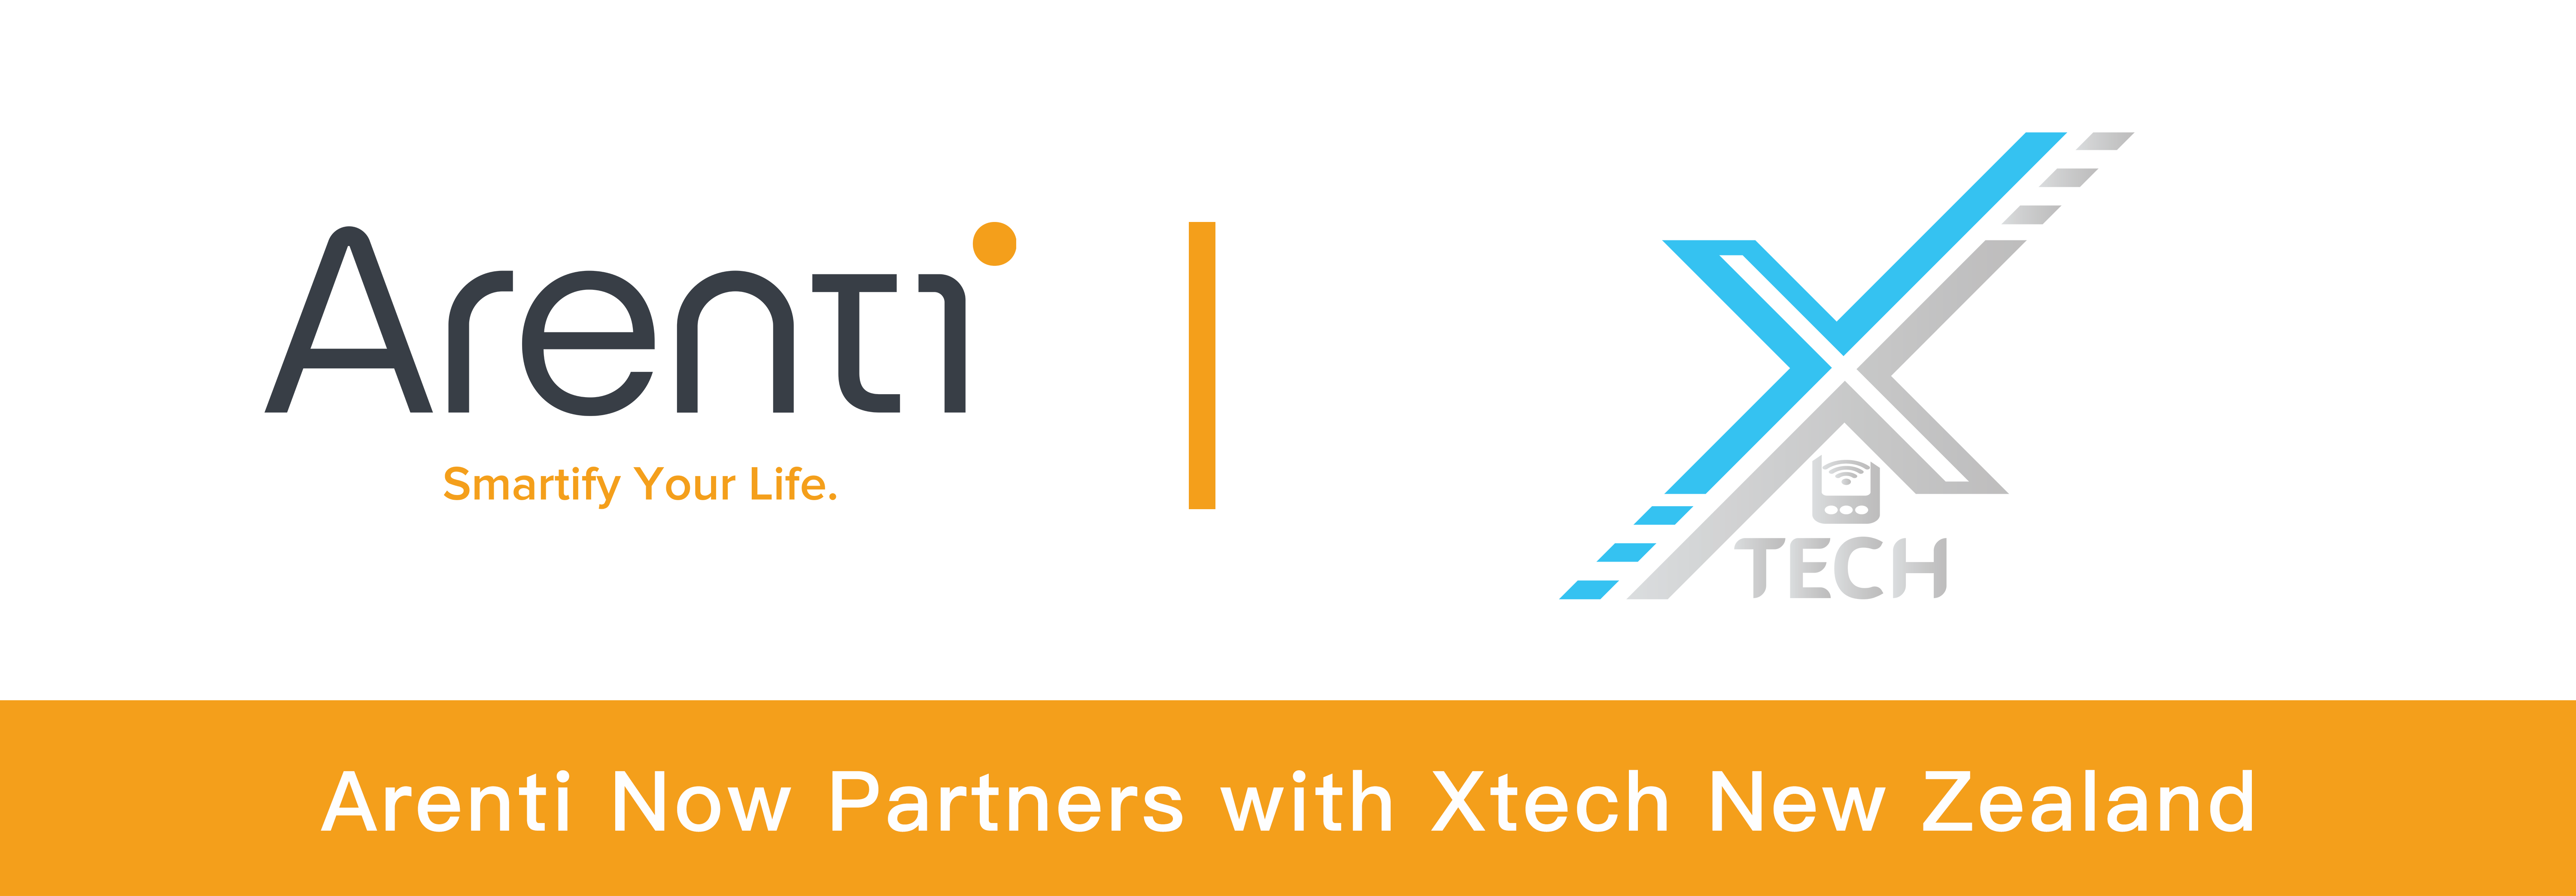 Arenti Partners pẹlu Xtech